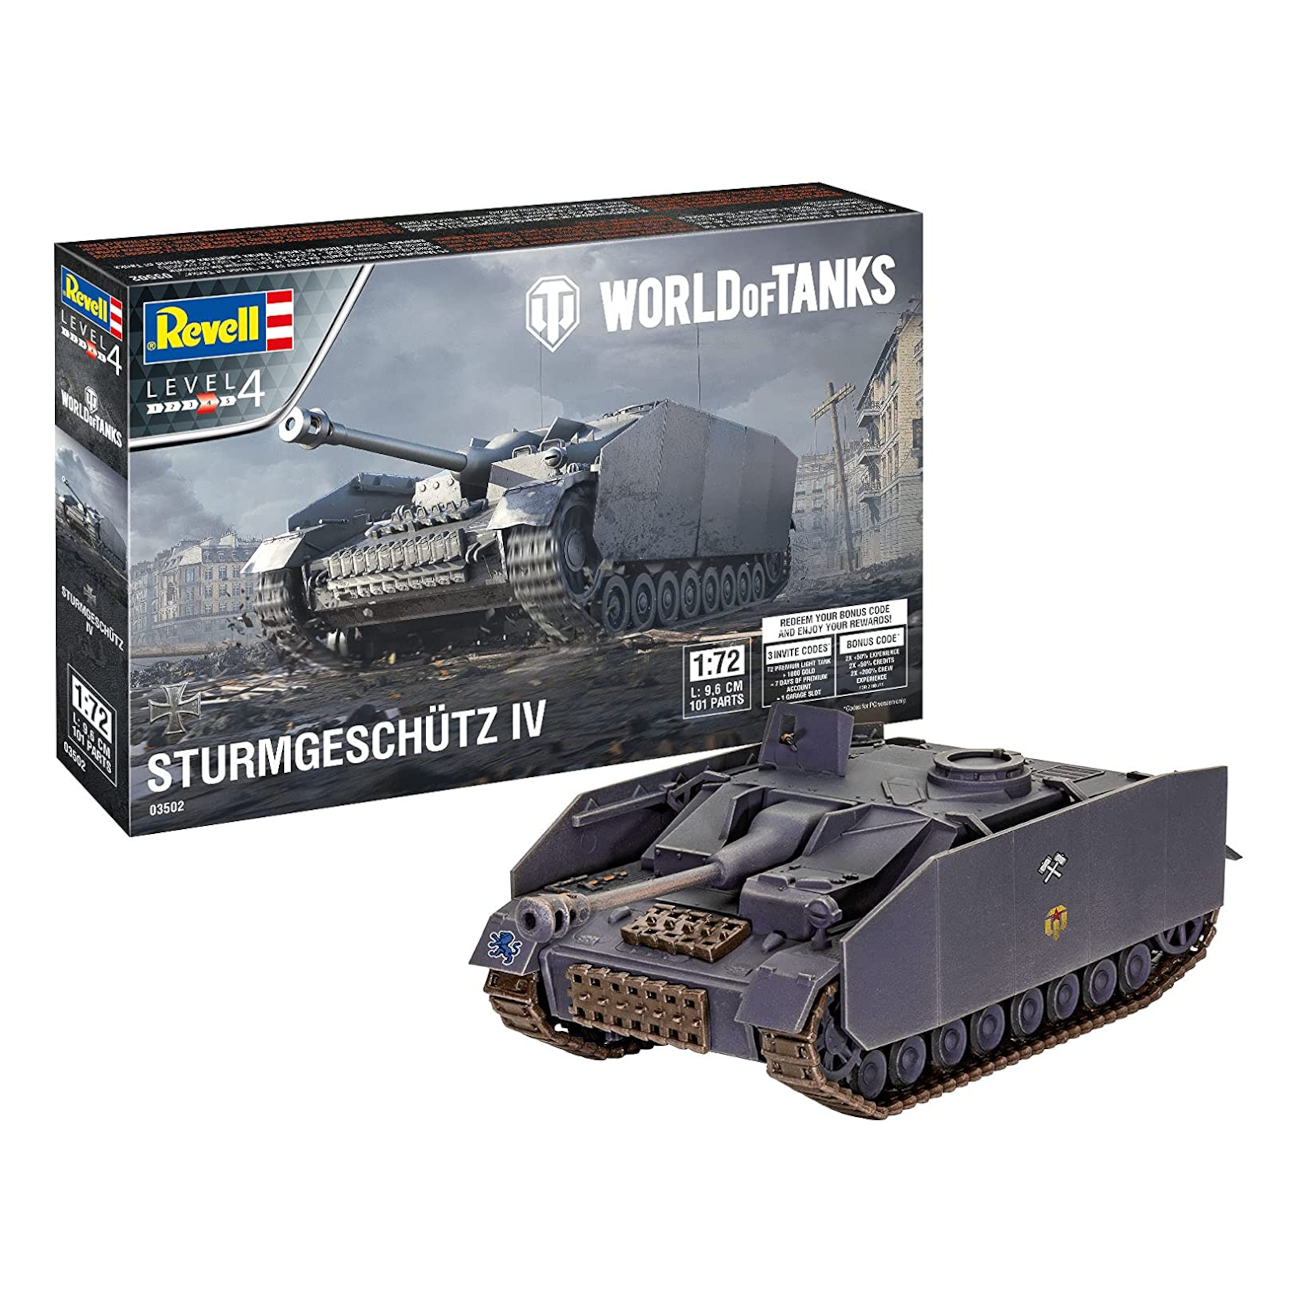 Sturmgeschütz IV - World of Tanks (03502)